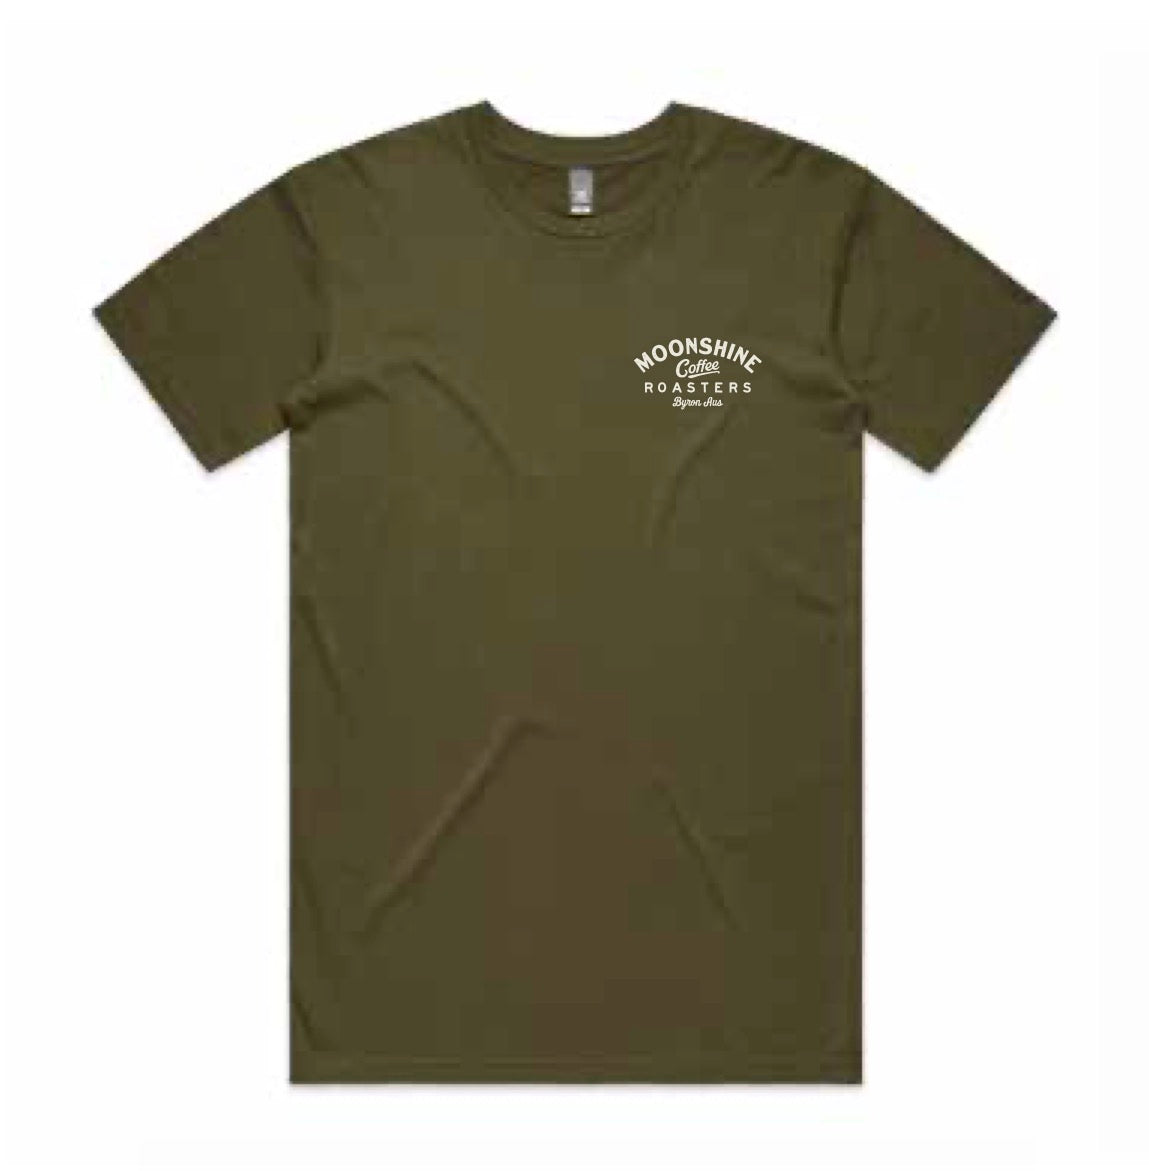 Federal Shop Shirt Merchandise Byron Moonshine Coffee   